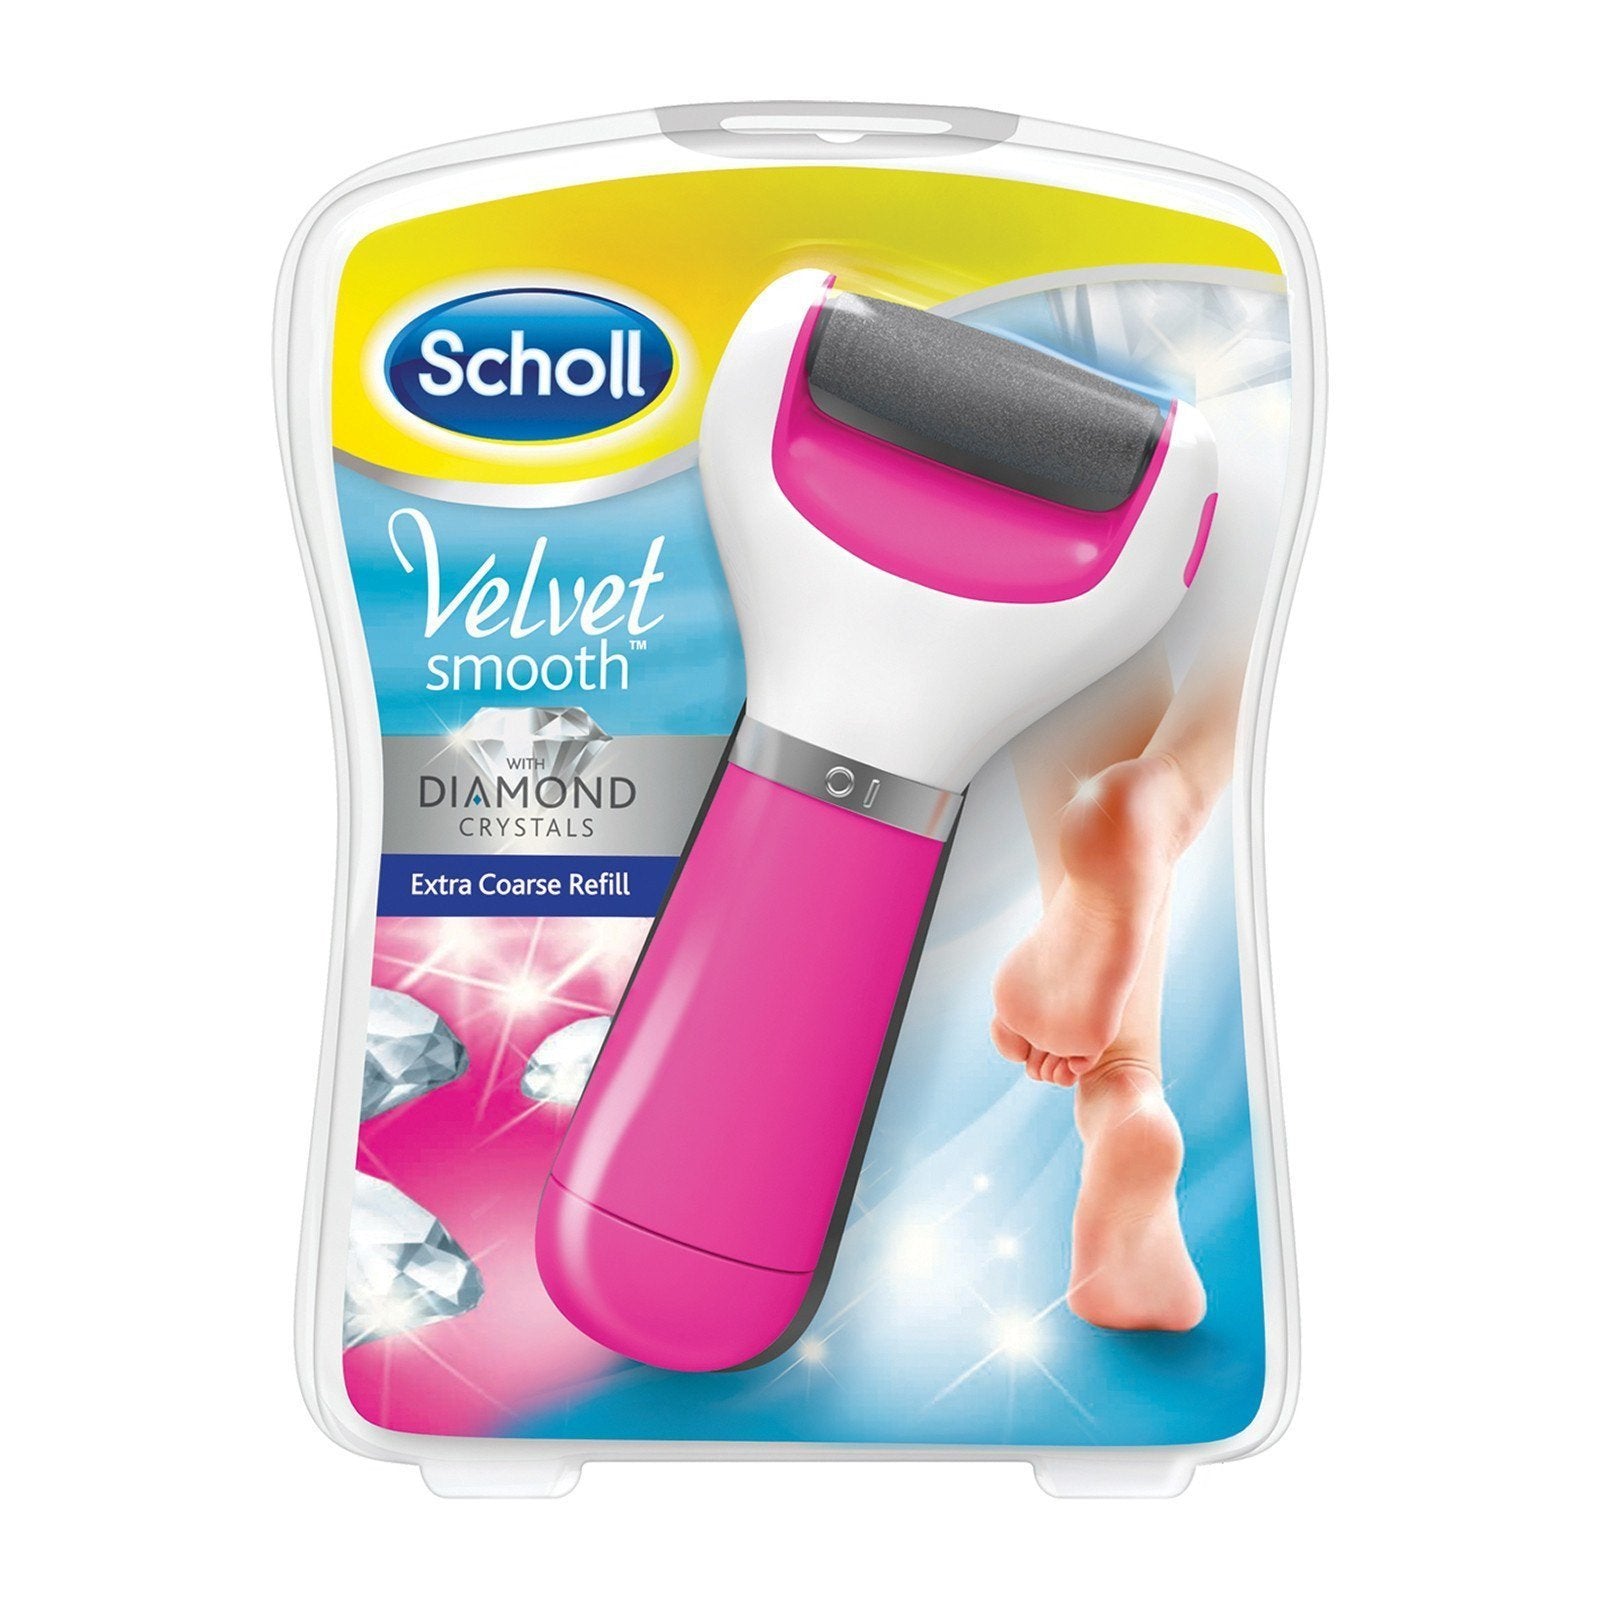 Scholl - Velvet Smooth Express Pedi Electronic Foot File (Pink) -  Body Care  Durio.sg